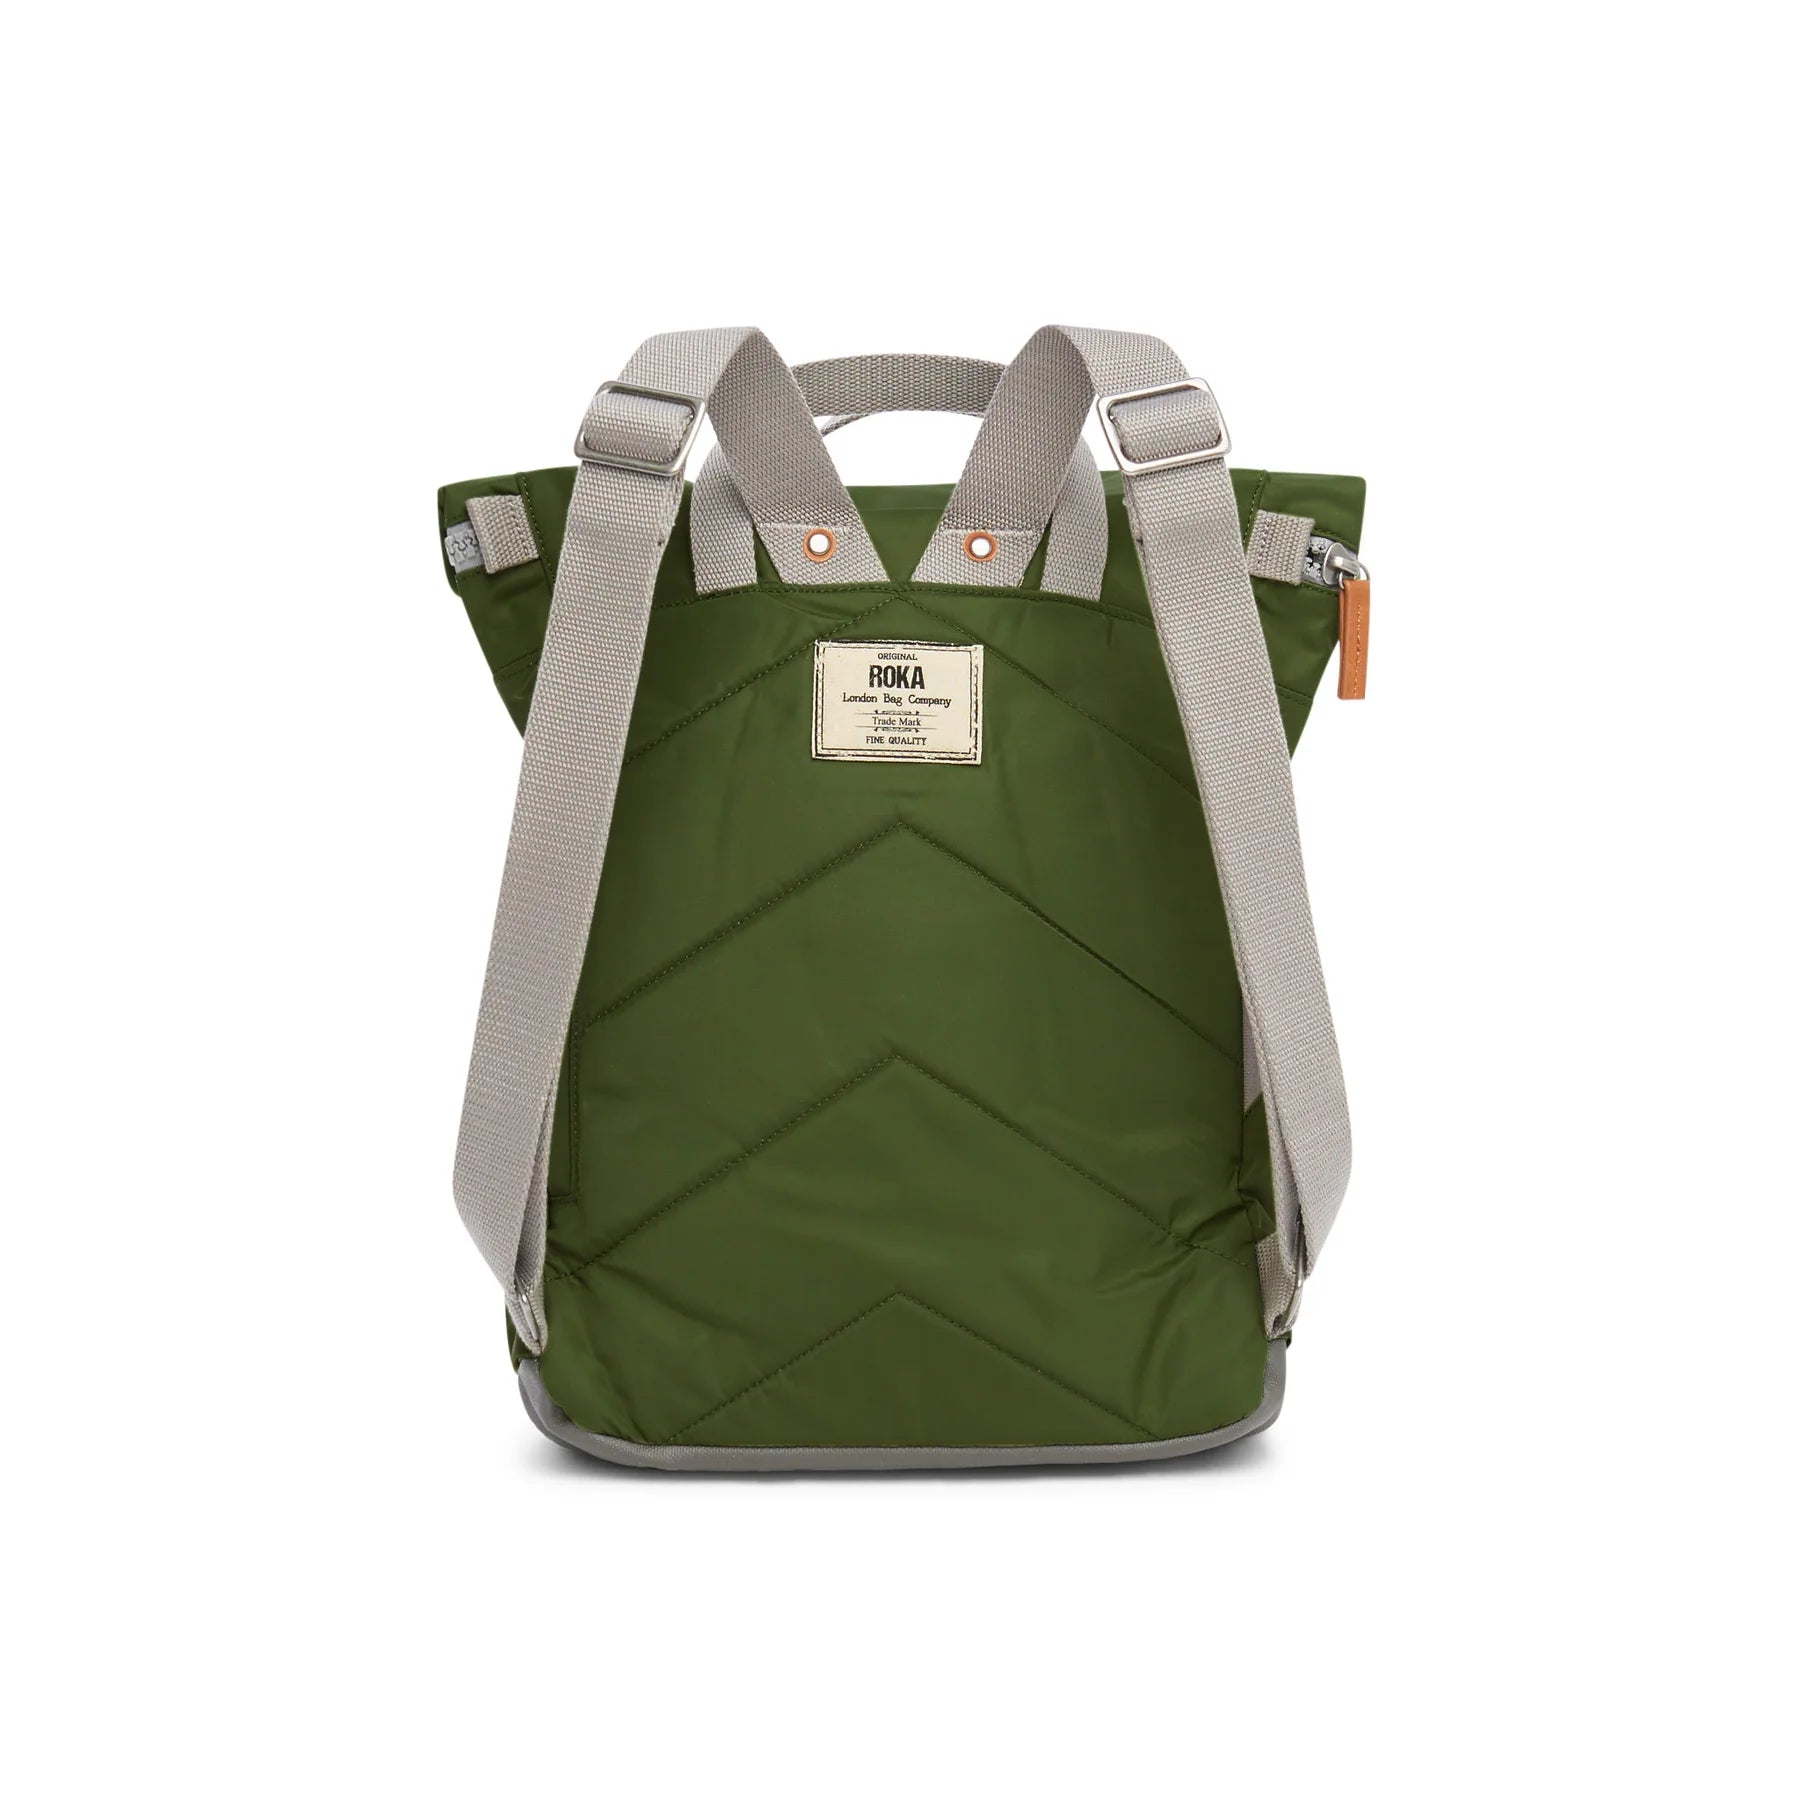 Roka London - Canfield B Medium Backpack in Avocado